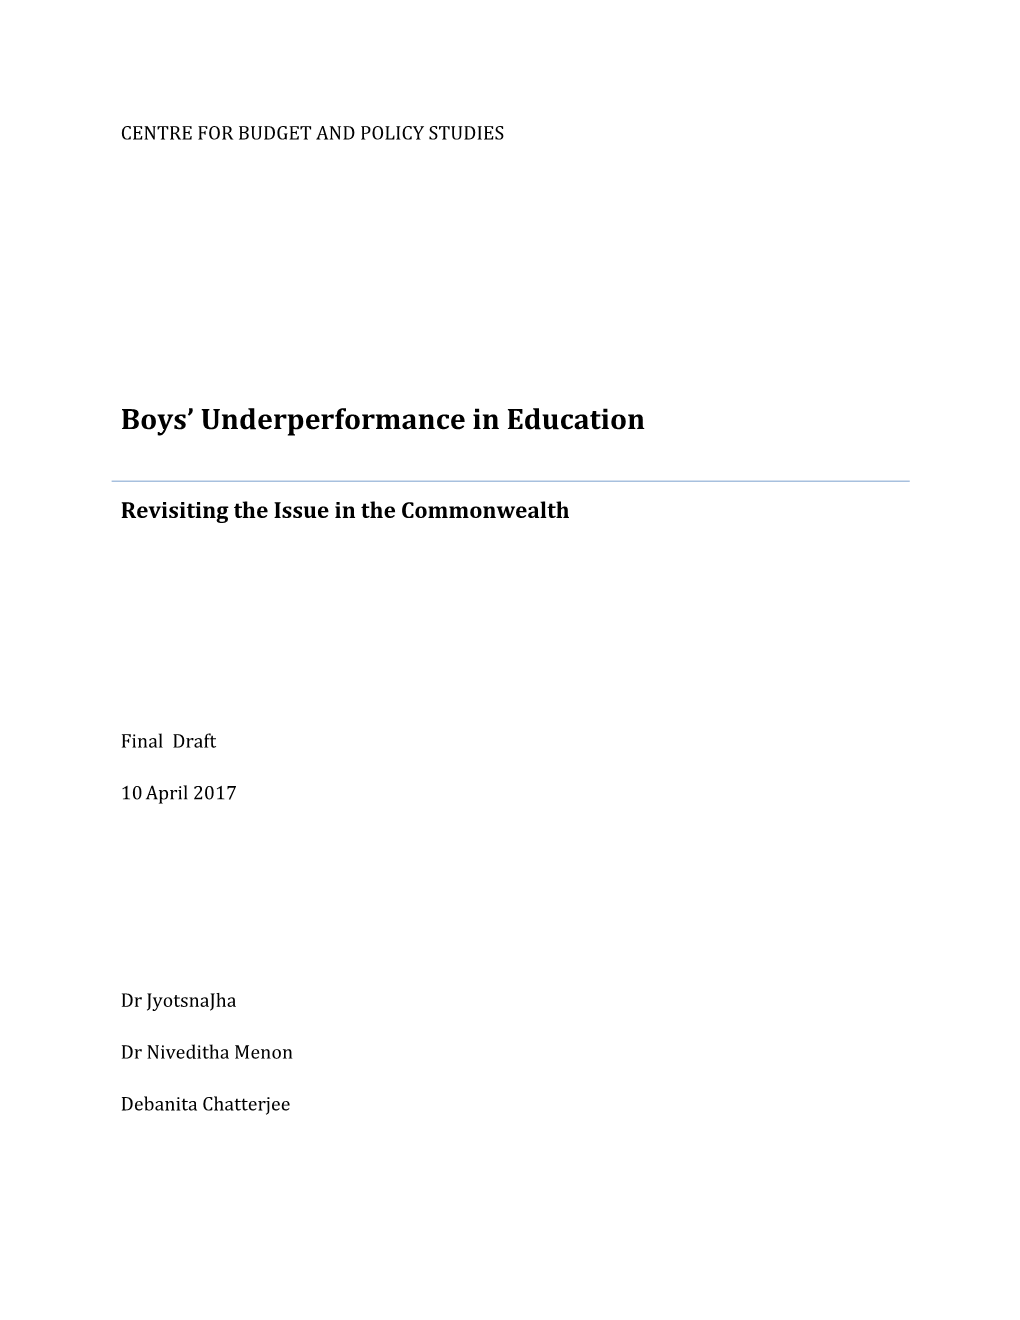 Boys' Underperformance in Education